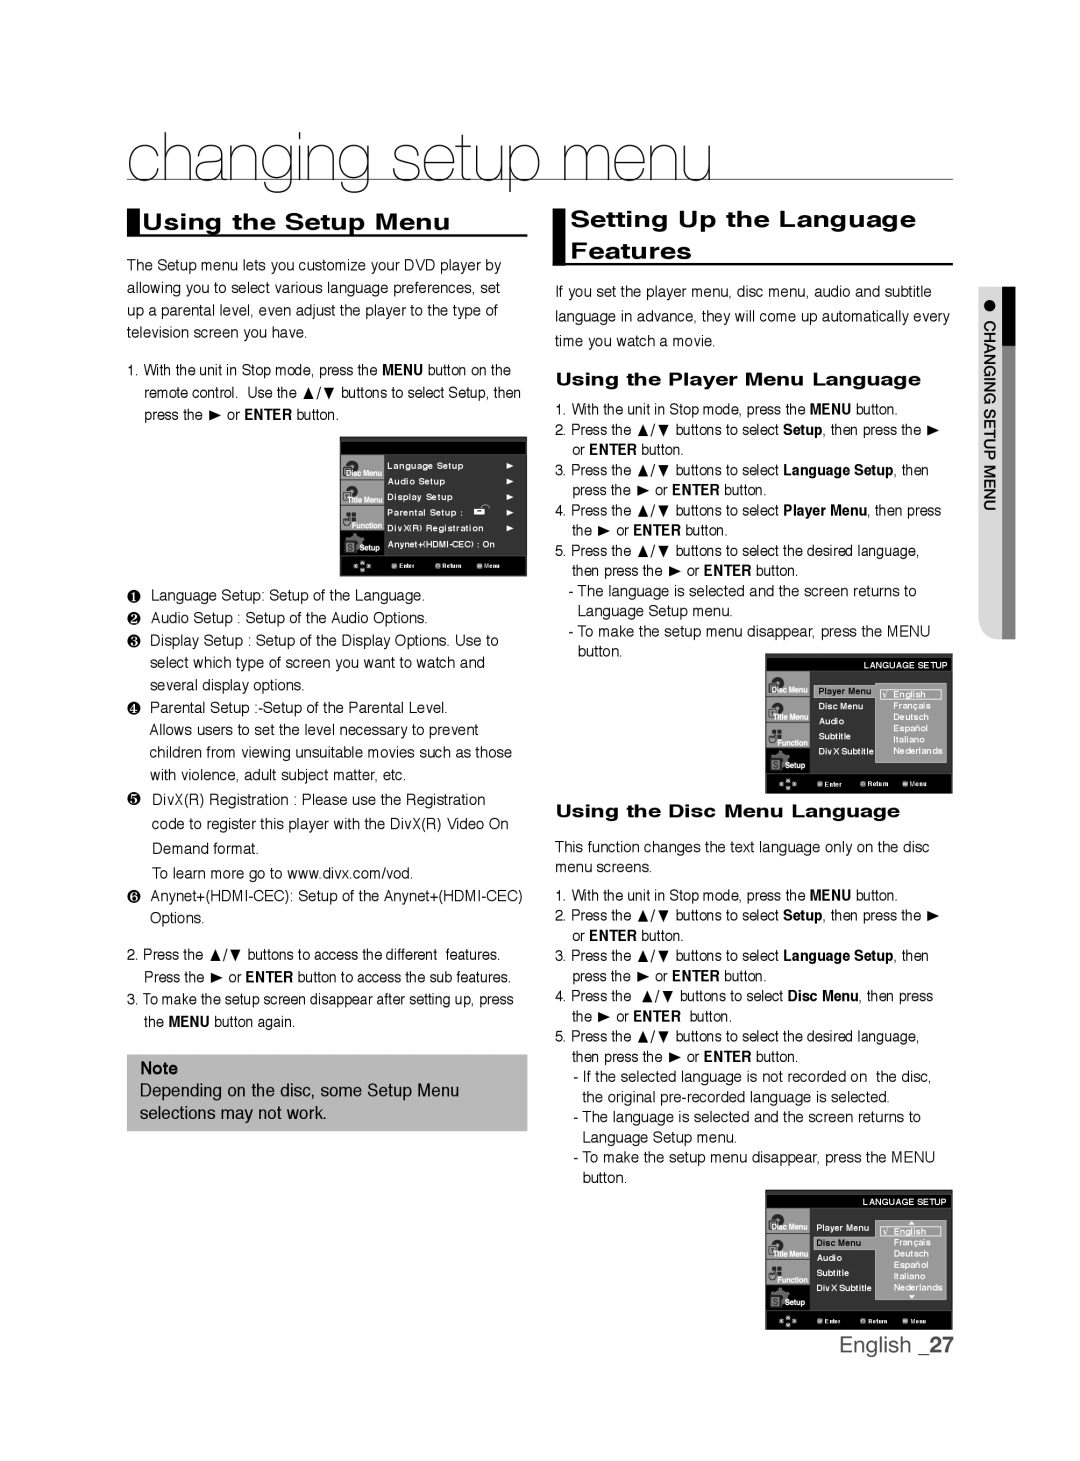 Samsung DVD-1080P9/MEA manual changing setup menu, Using the Setup Menu, Setting Up the Language Features, English 